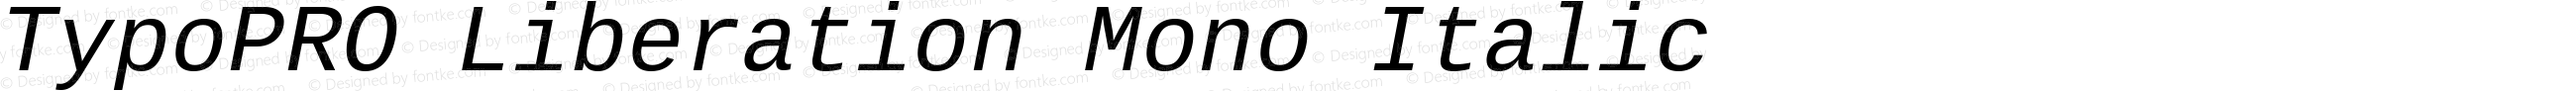 TypoPRO Liberation Mono Italic